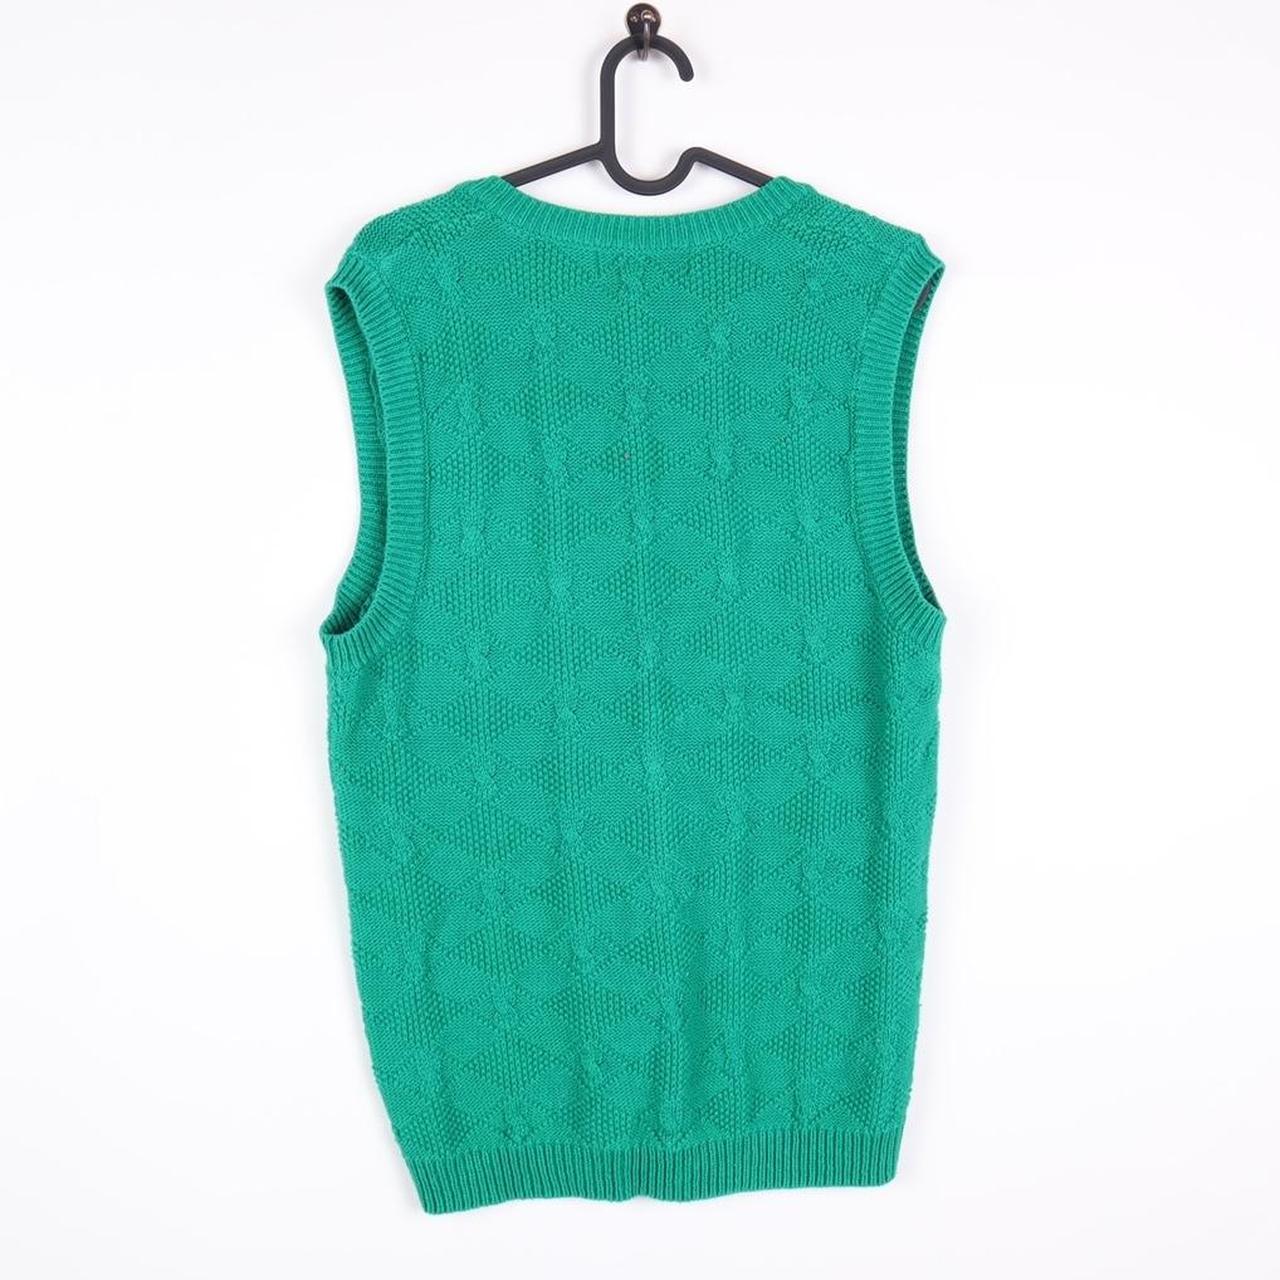 Vintage 90s Green Sweater Vest Size: Small Good... - Depop